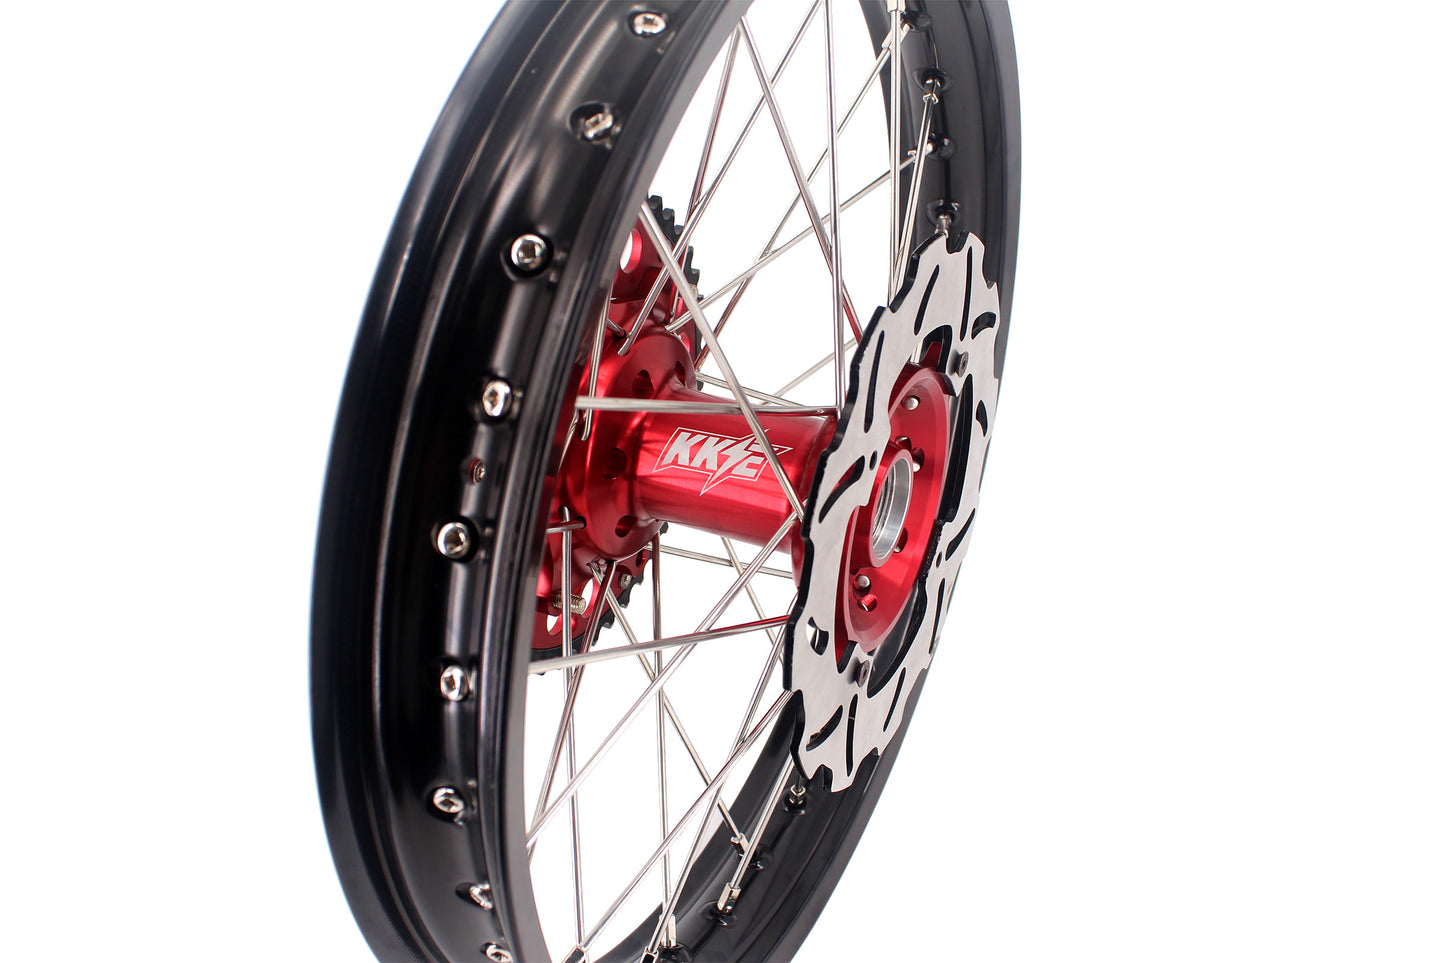 KKE 21/18 21/19 CNC MX Dirtbike Wheels Rims Set For Honda XR650R 2000-2008 240mm Discs